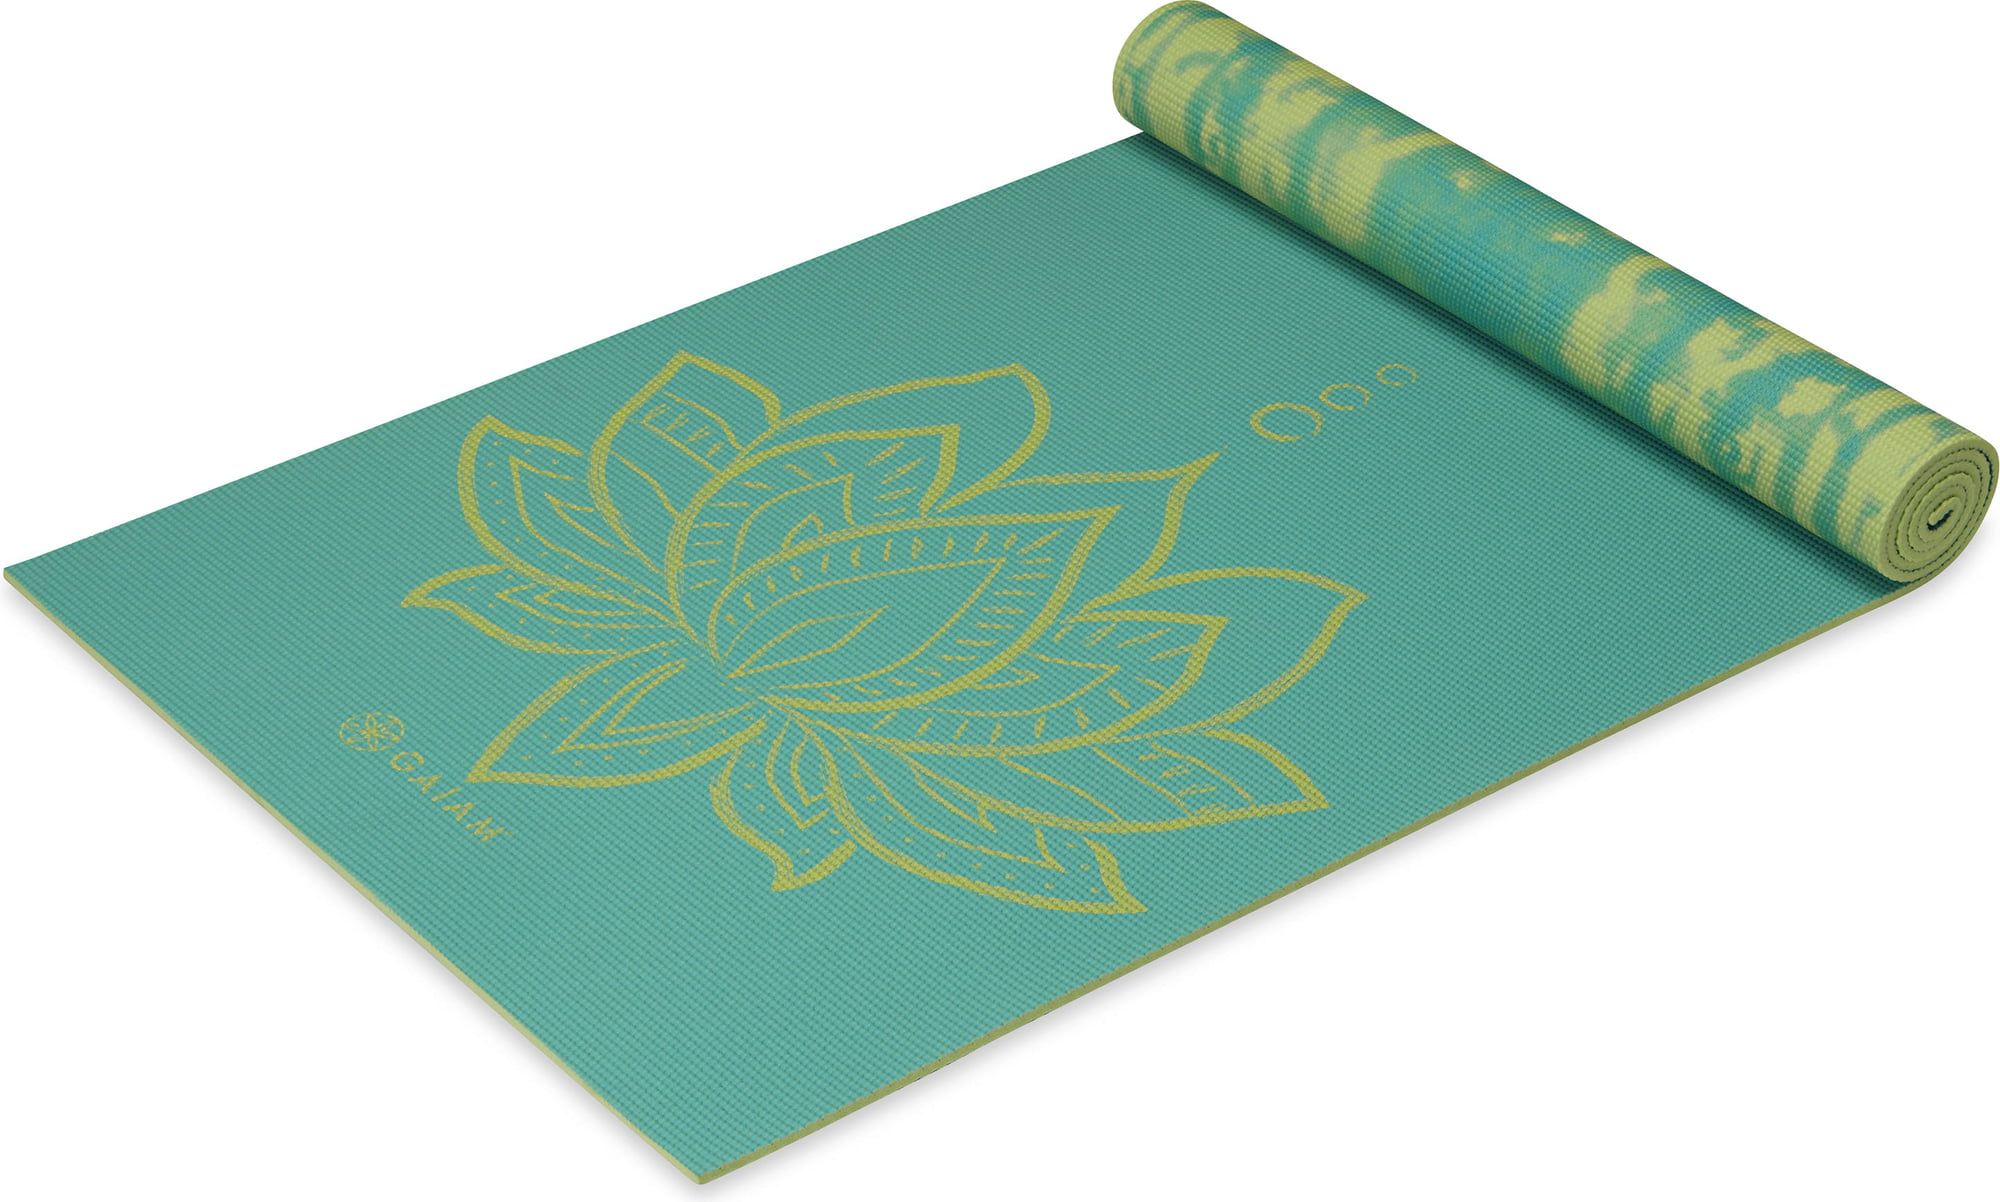  Gaiam Yoga Mat - Premium 6mm Print Reversible Extra